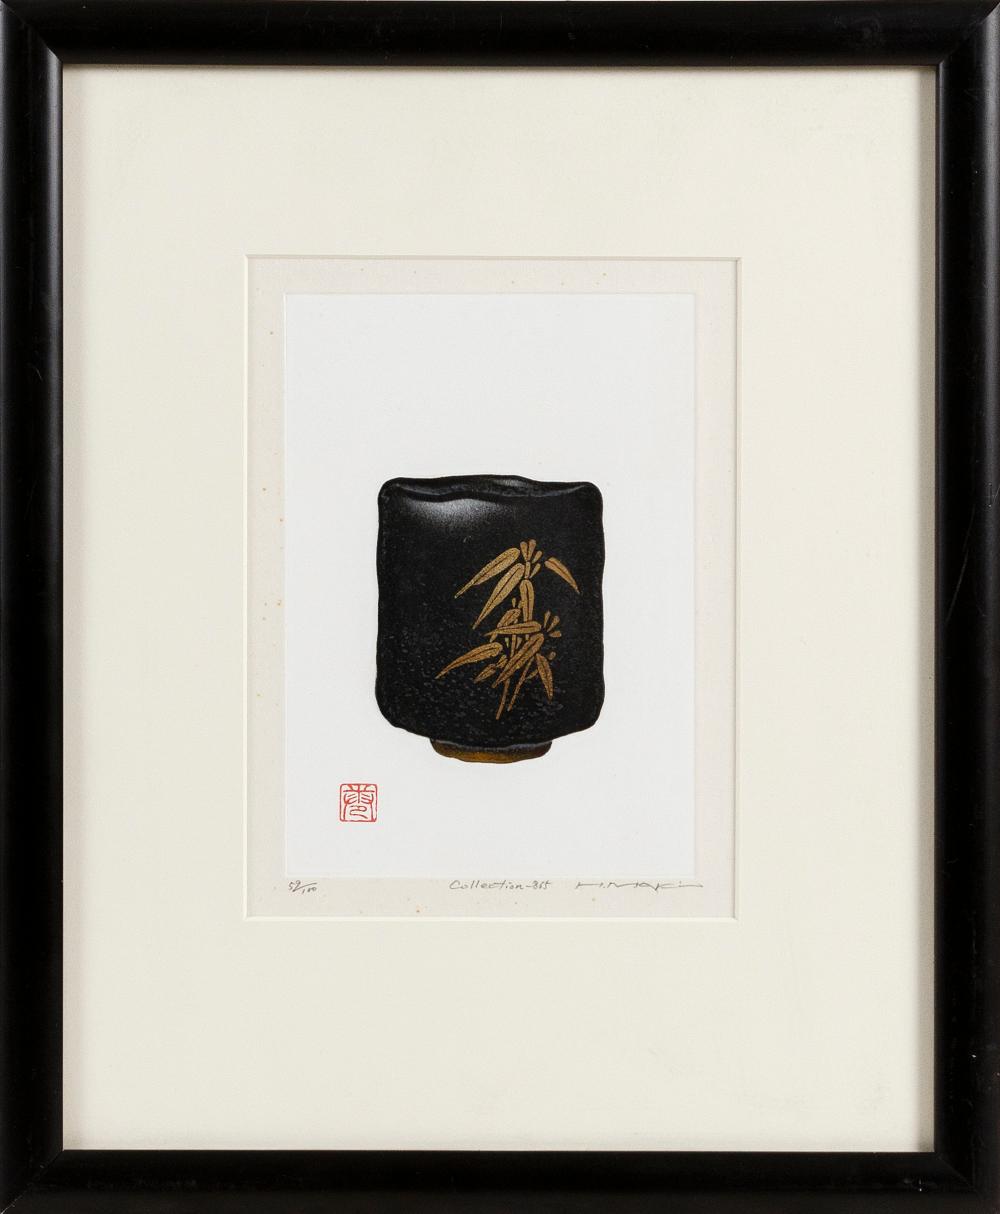 HAKU MAKI (JAPAN, 1924-2000), "COLLECTION